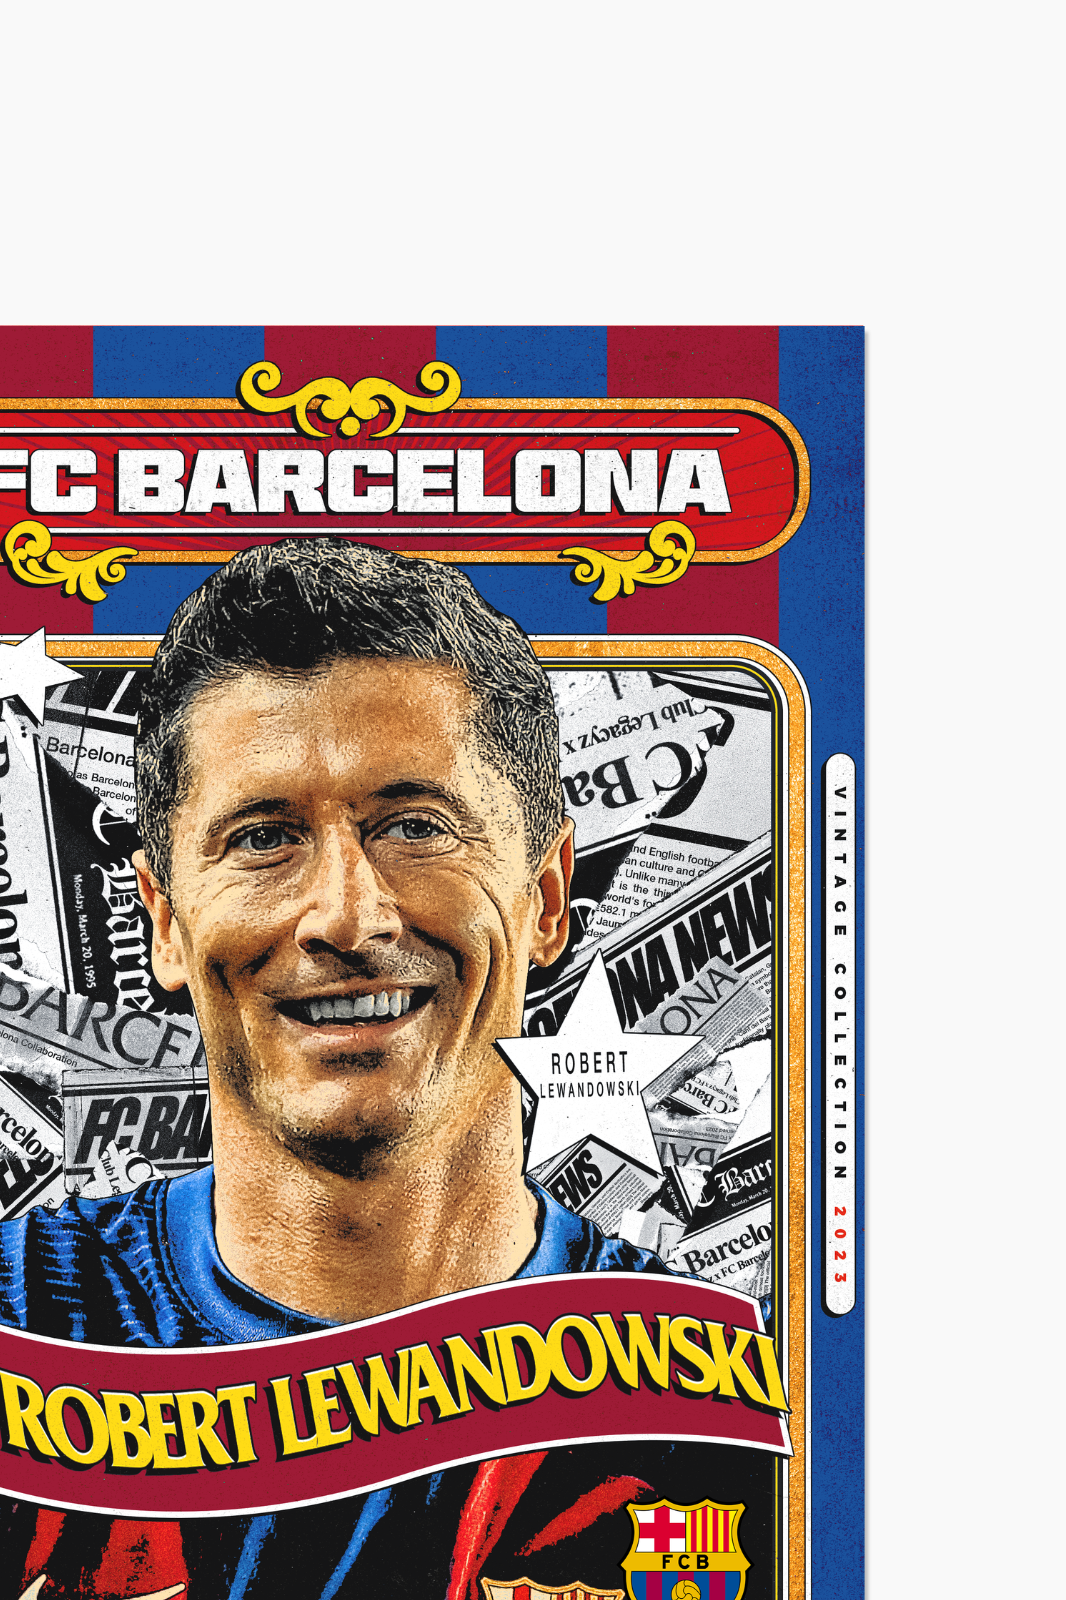 FC Barcelone - Poster Retro Robert Lewandowski 100 exemplaires